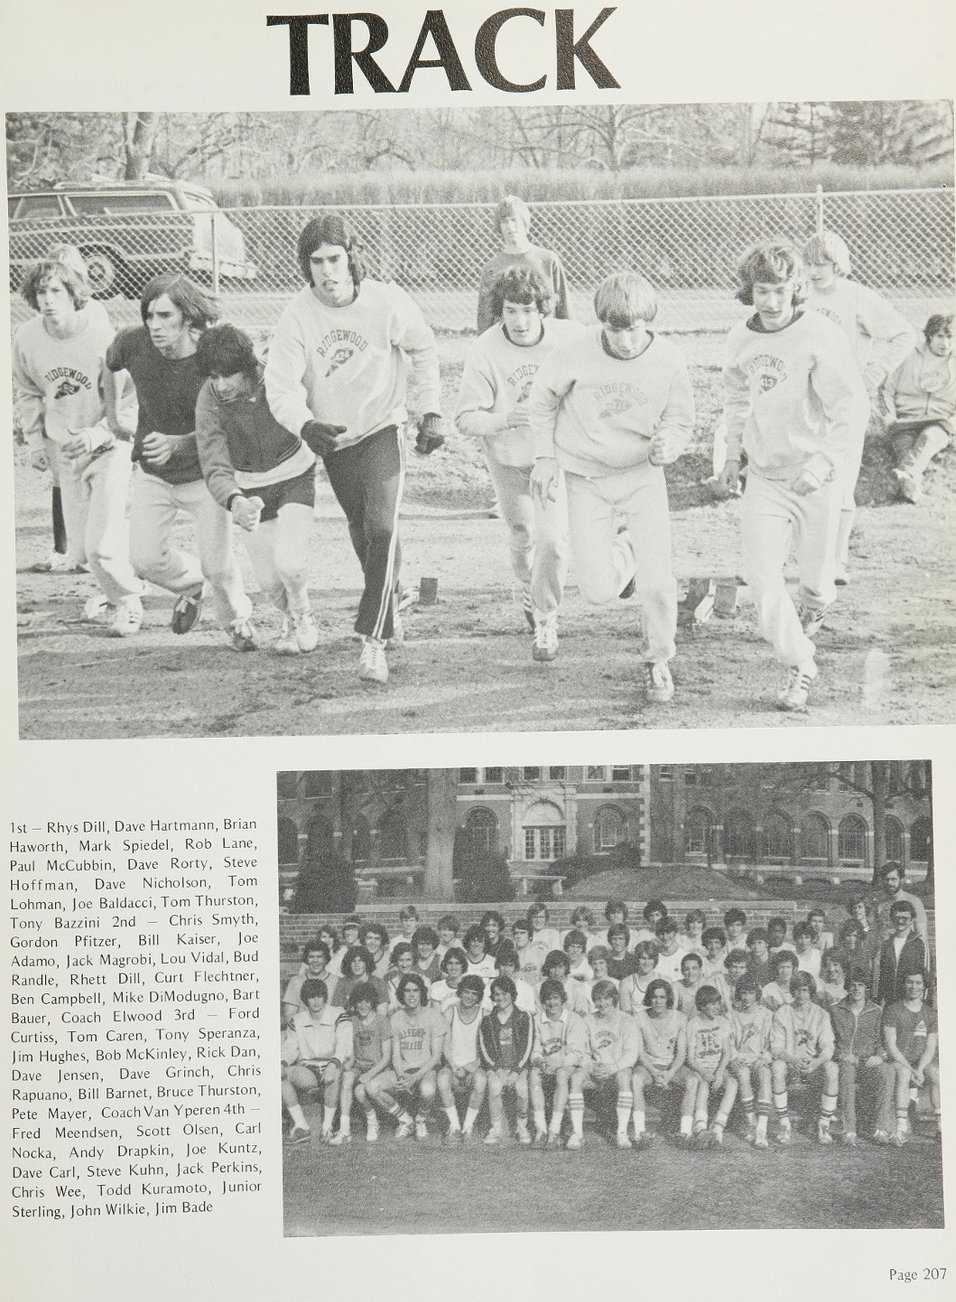 1977 Boys’ Track Team